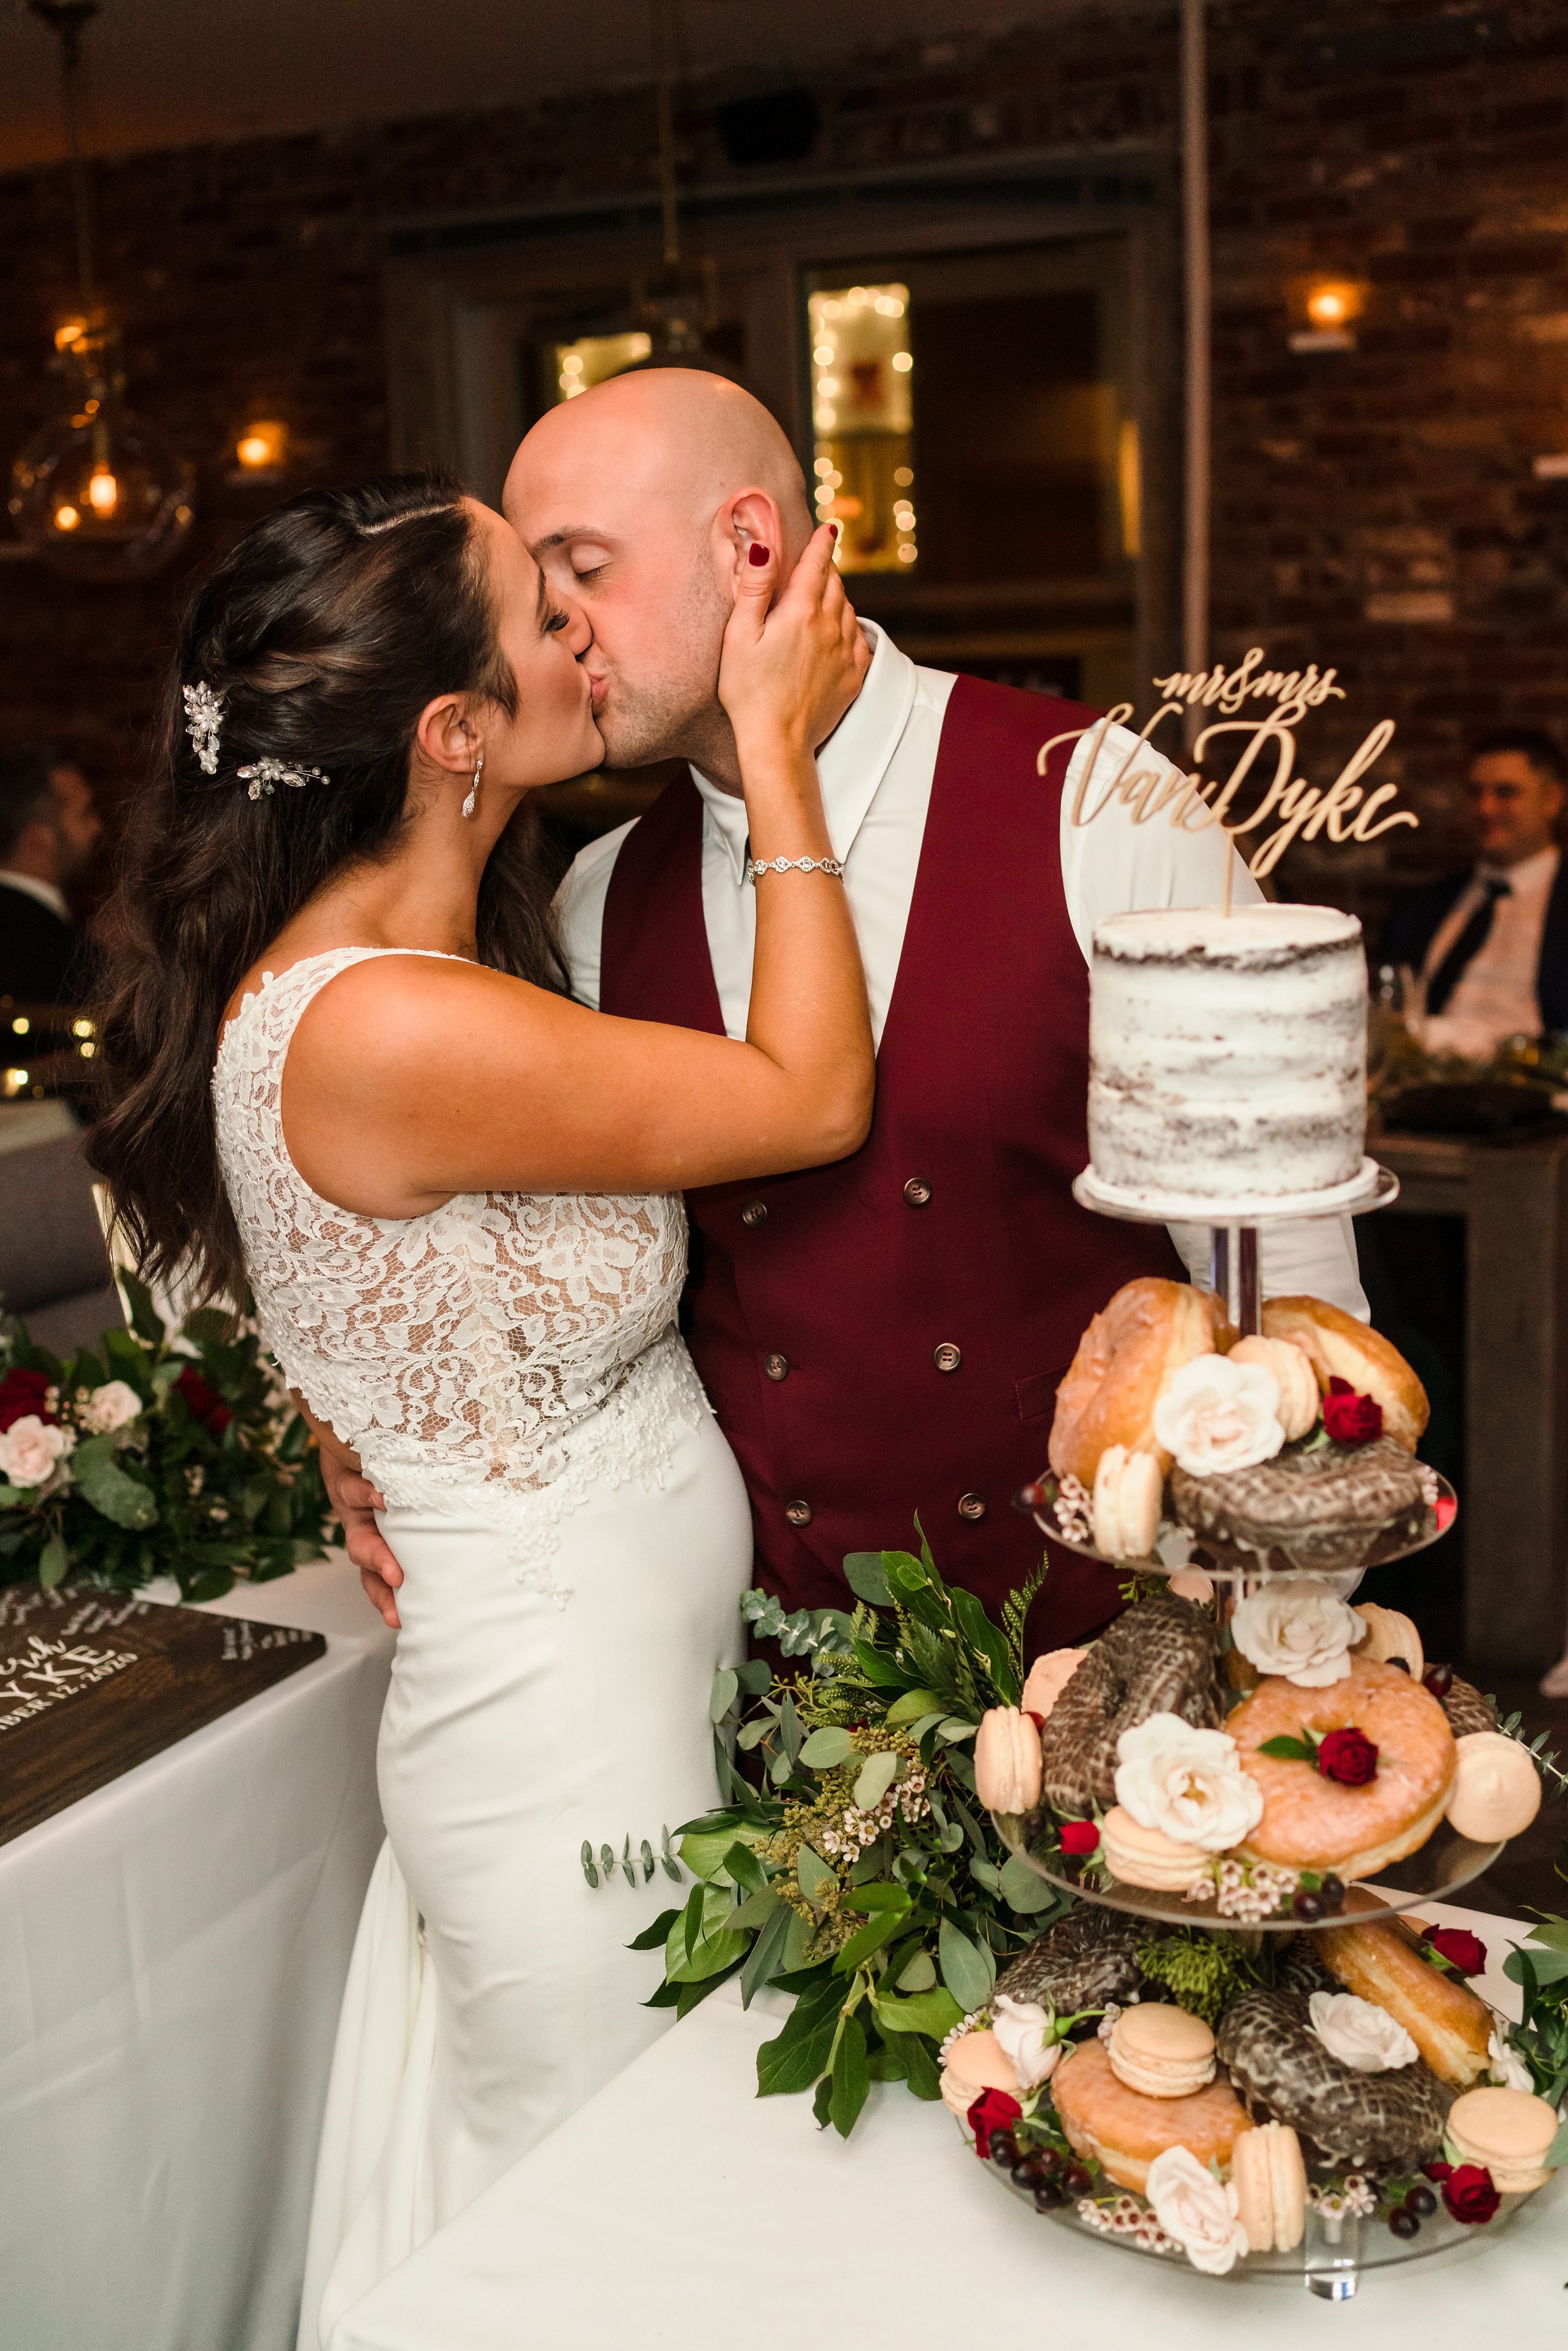 Natural wedding photography,cake cutting,kiss